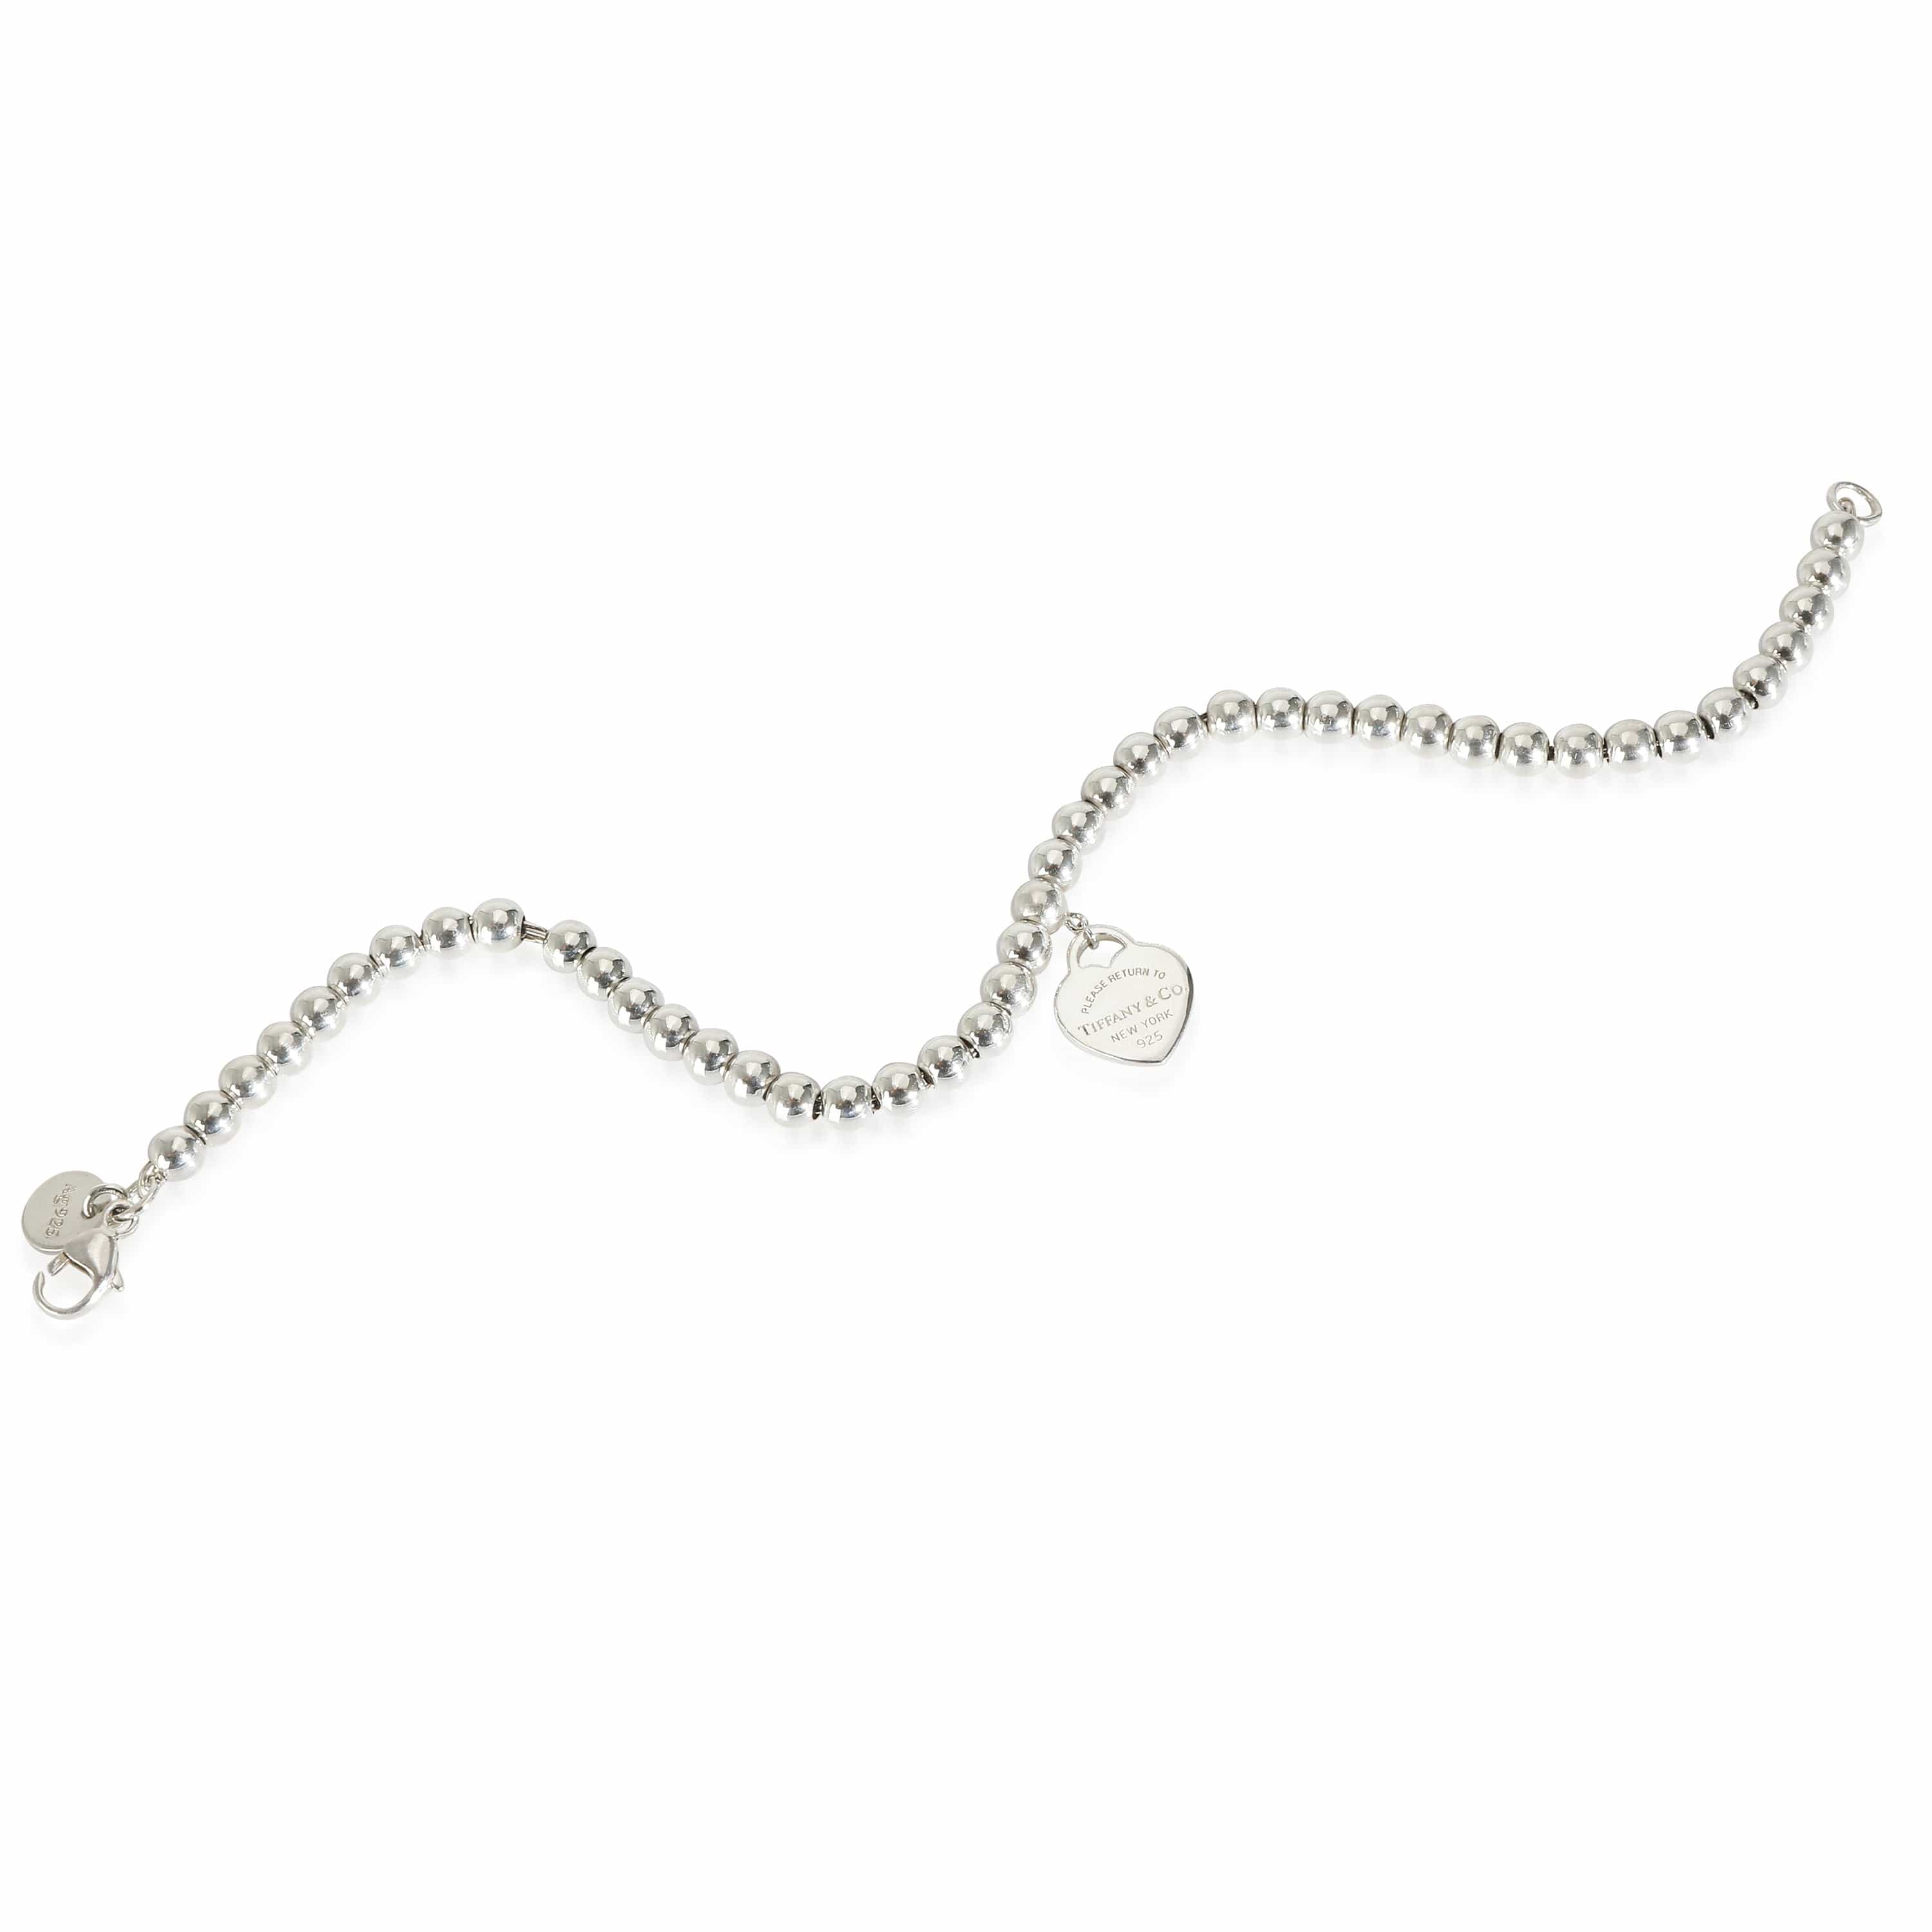 Tiffany & Co. Tiffany & Co. Return to Tiffany Bracelet in Sterling Silver